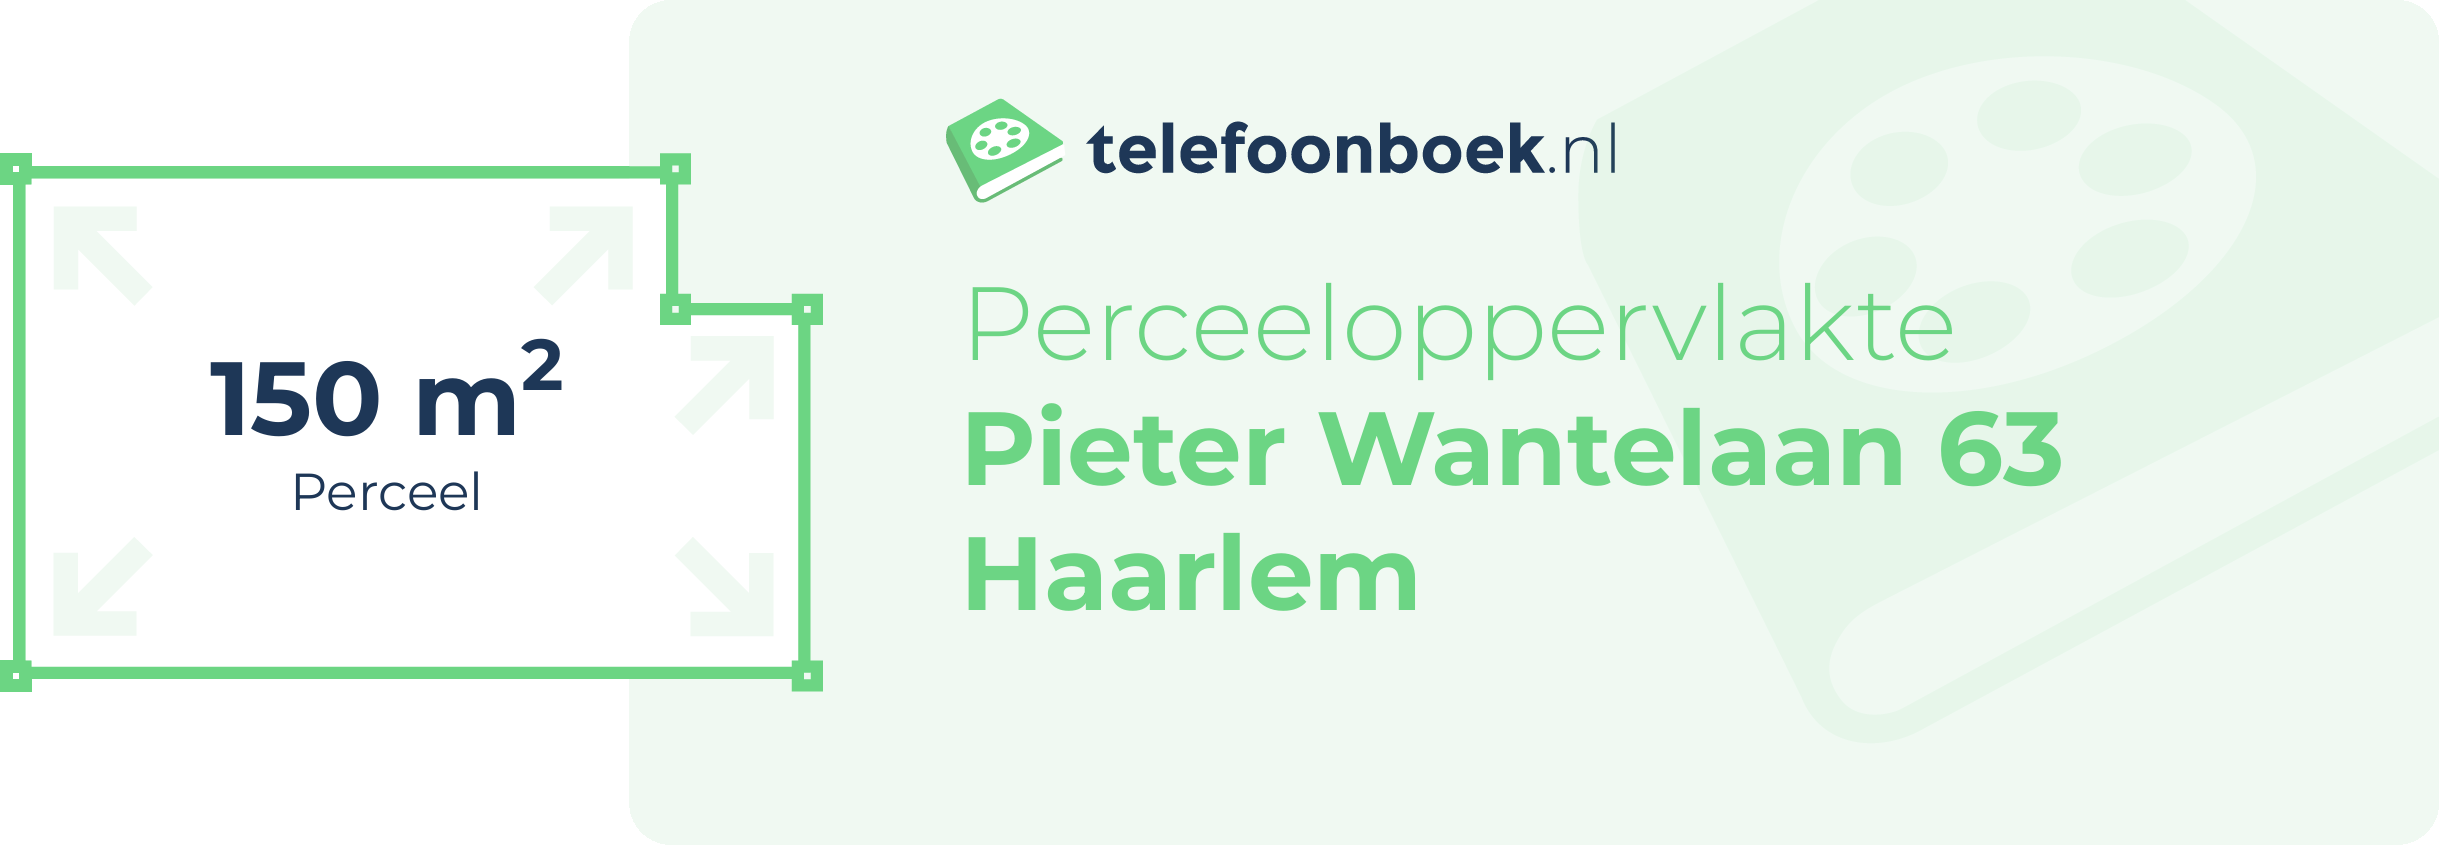 Perceeloppervlakte Pieter Wantelaan 63 Haarlem